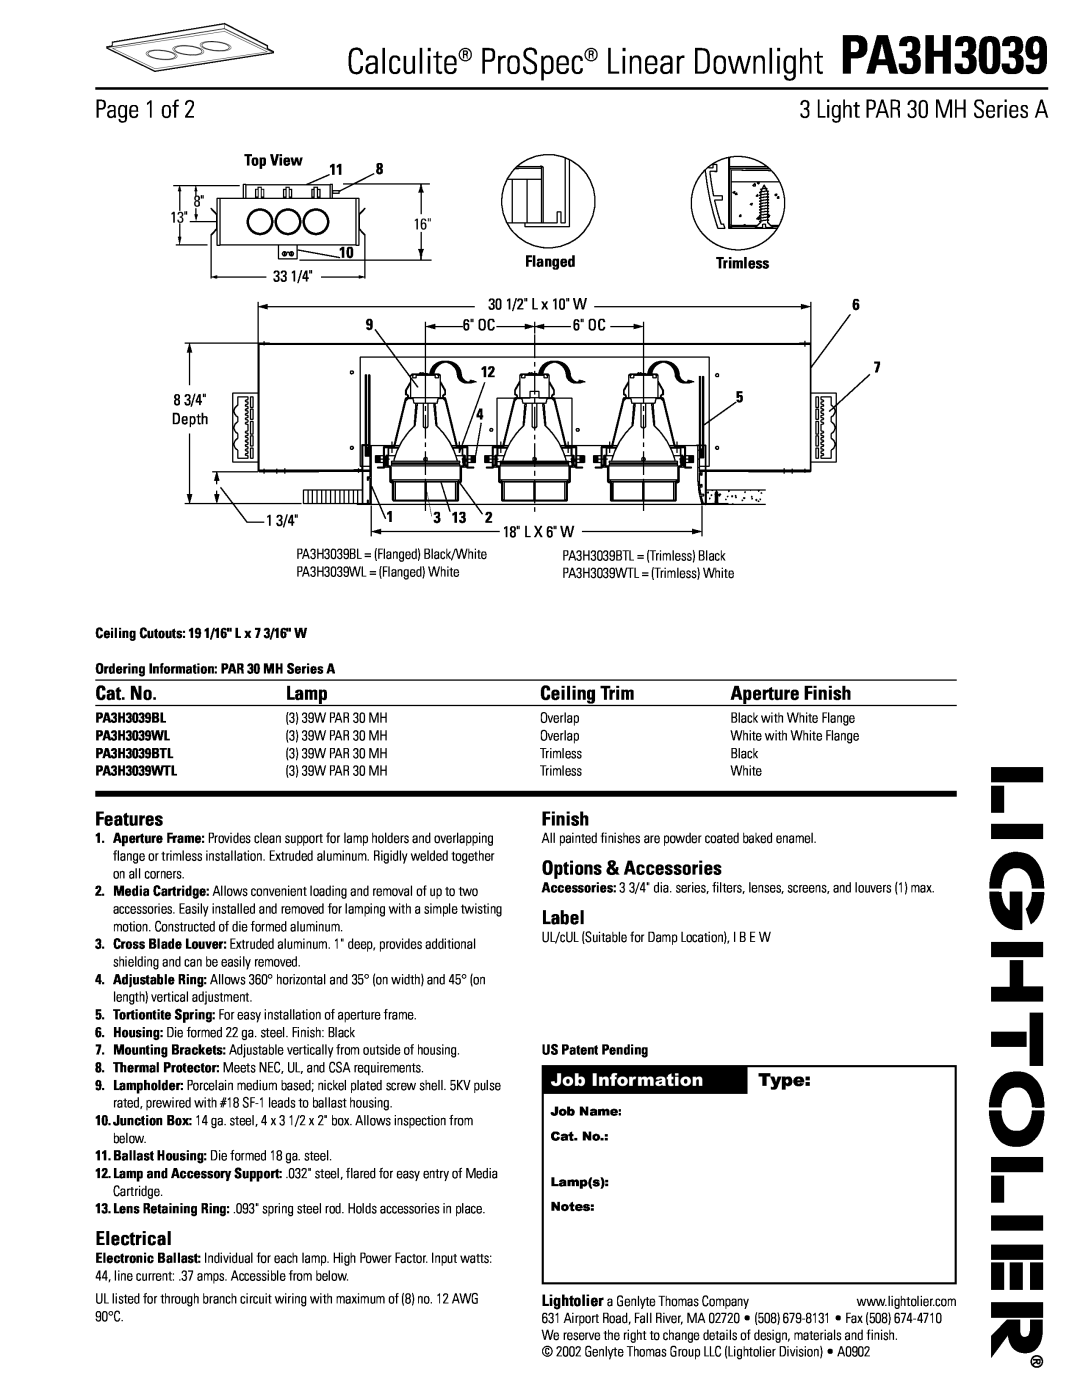 Lightolier PA3H3039 manual Page 1 of, Light PAR 30 MH Series A, Cat. No, Lamp, Ceiling Trim, Aperture Finish, Features 